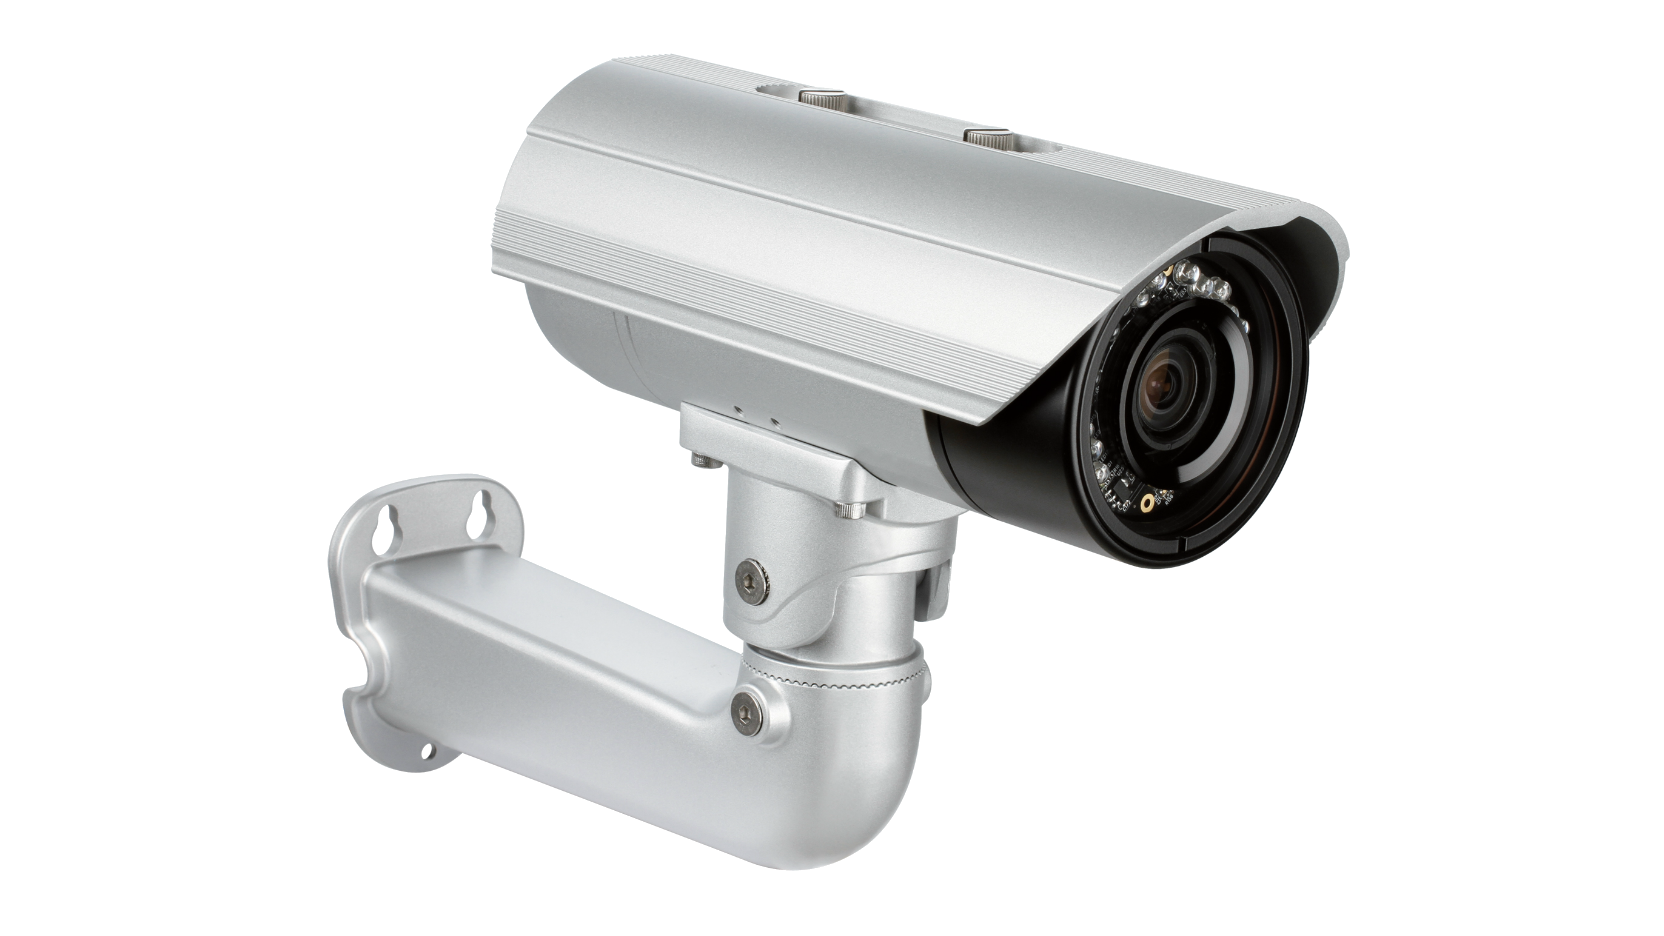 D8Z08AA - HP Webcam 1 Megapixel USB Widescreen Microphone